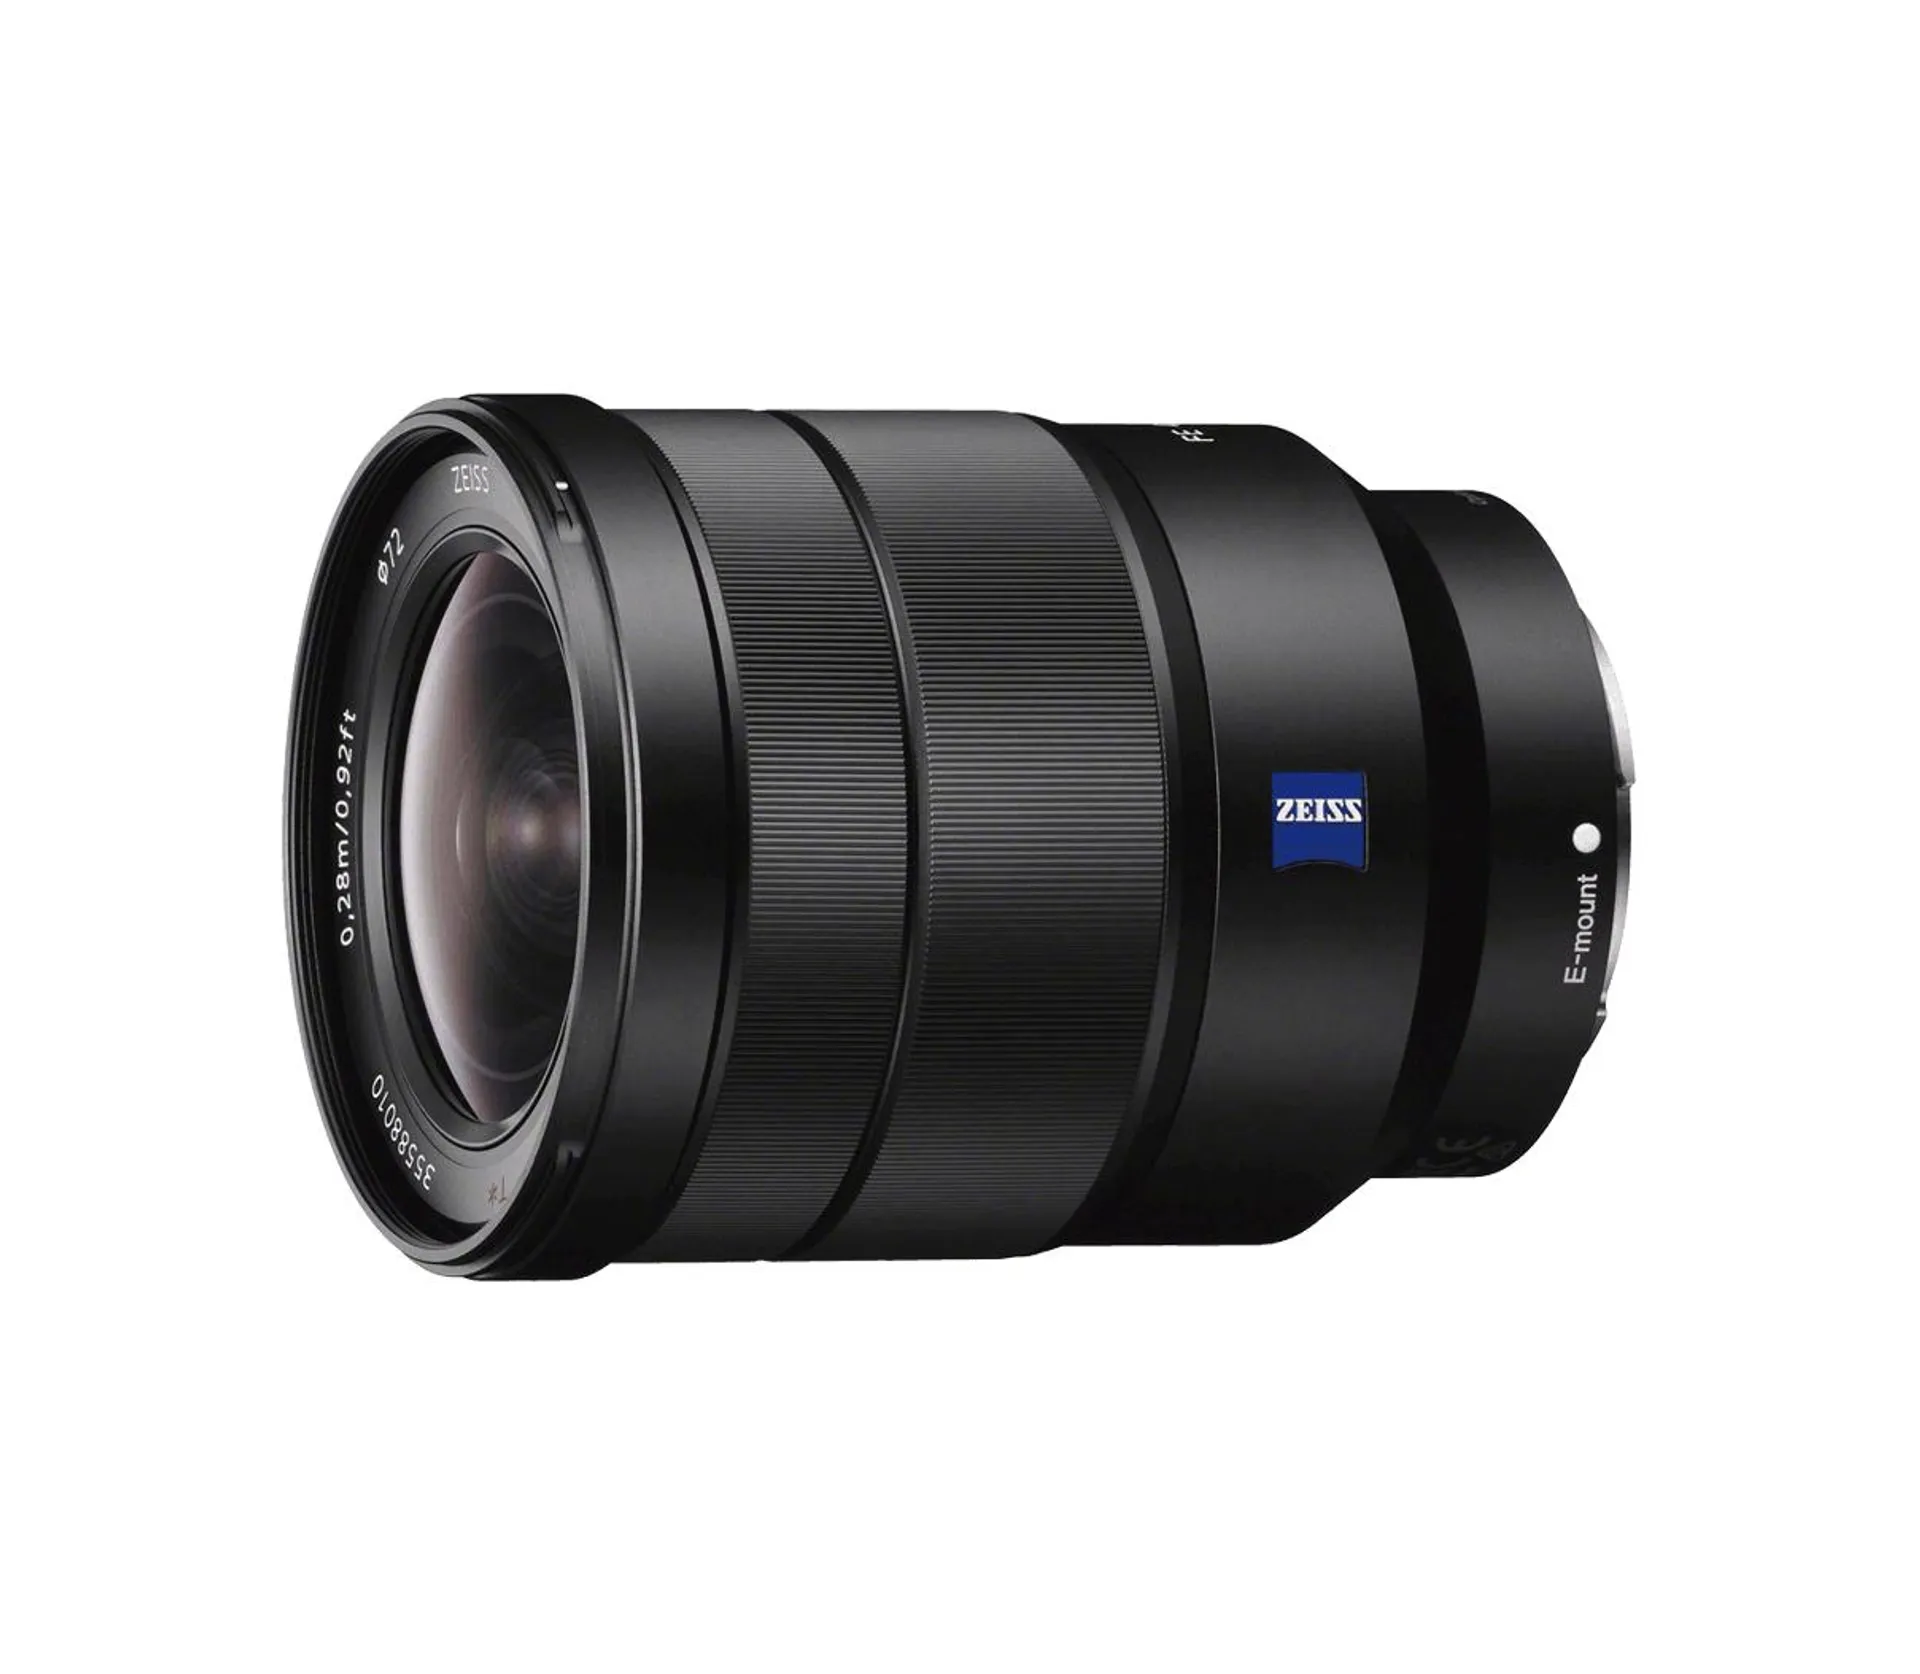 Vario-Tessar T* FE 16–35 mm F4 ZA OSS Full-frame Wide-angle Zoom ZEISS Lens with Optical SteadyShot